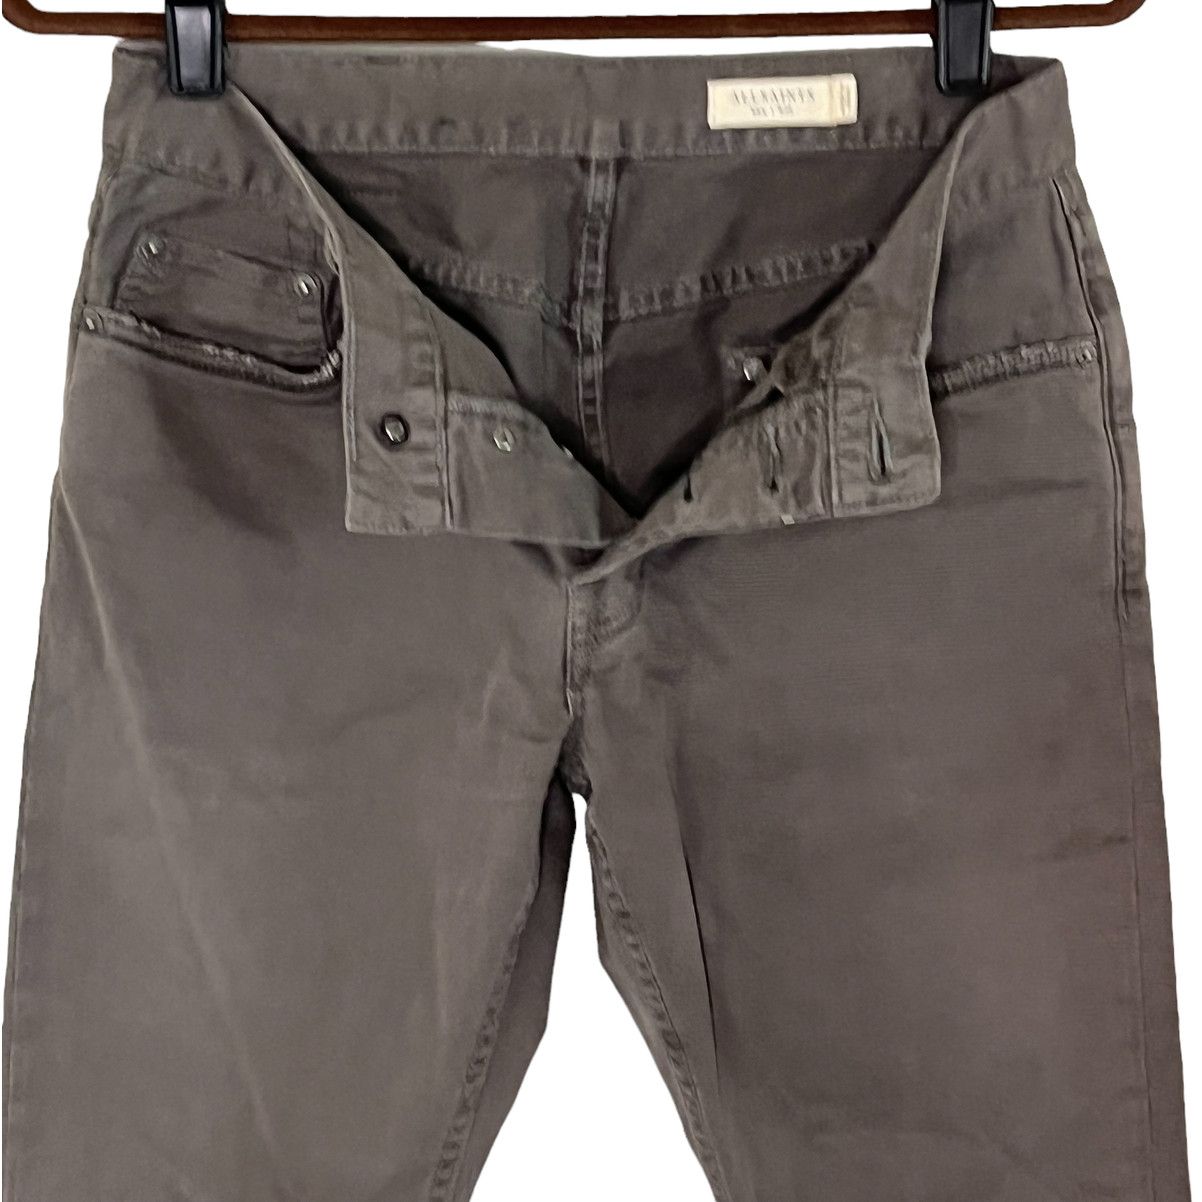 Allsaints AllSaints Size 28 Slate Gray Cotton Jeans Button Fly Size US 28 / EU 44 - 5 Thumbnail